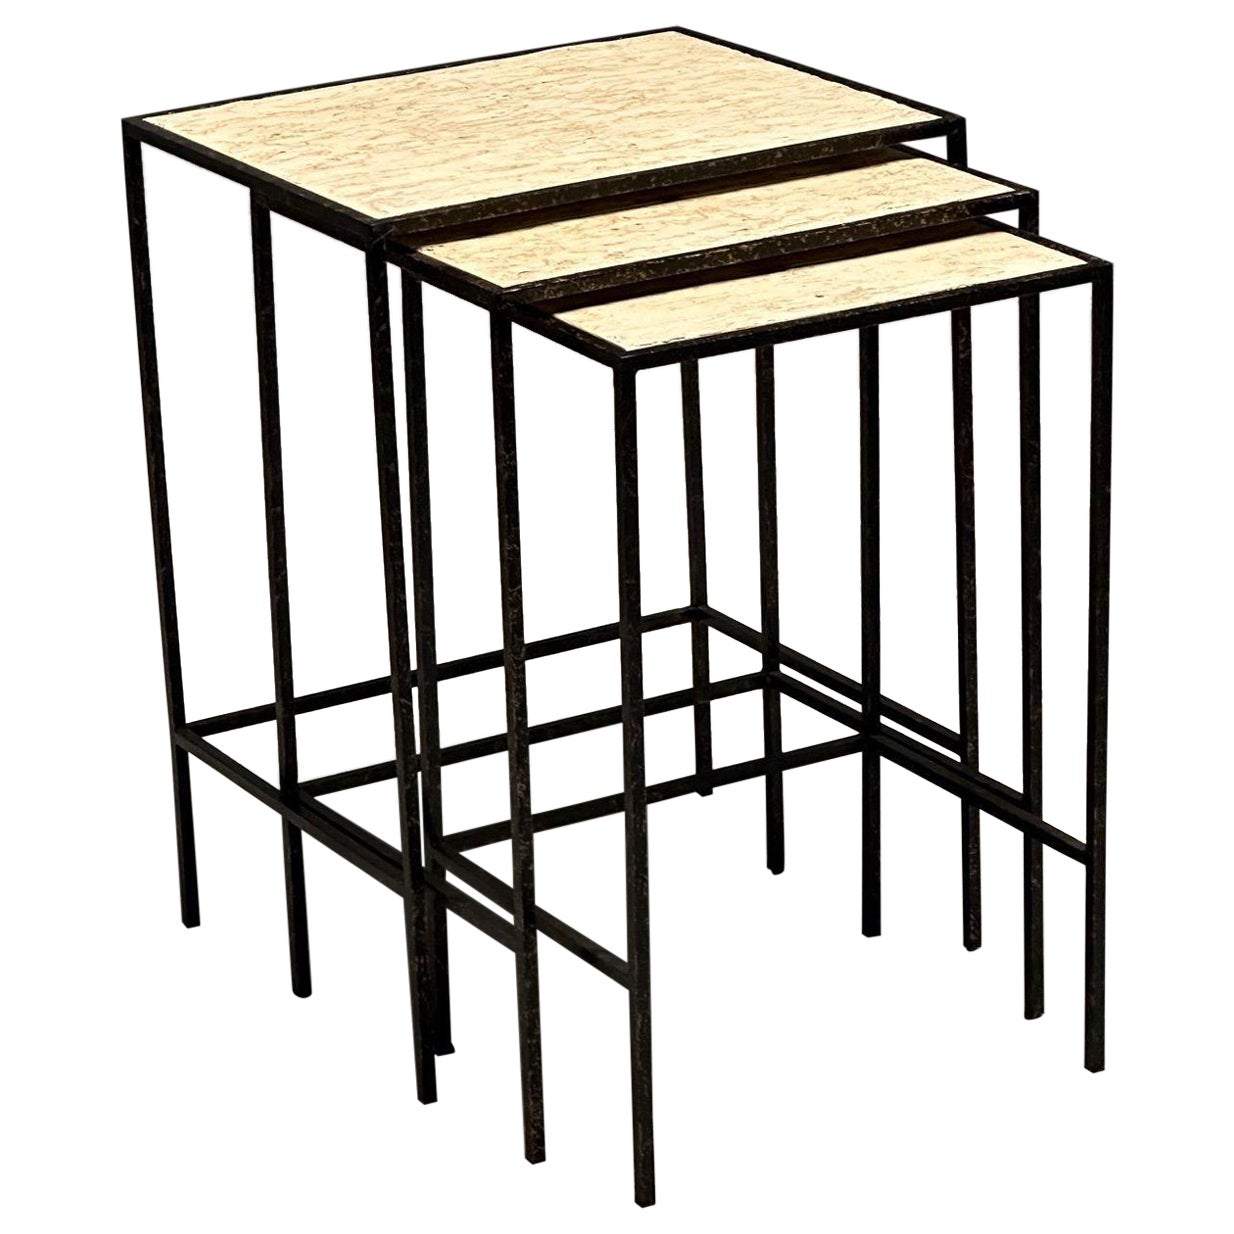 Ralph Lauren, Modern Nesting Tables, Faux Travertine, Metal, 21st C.